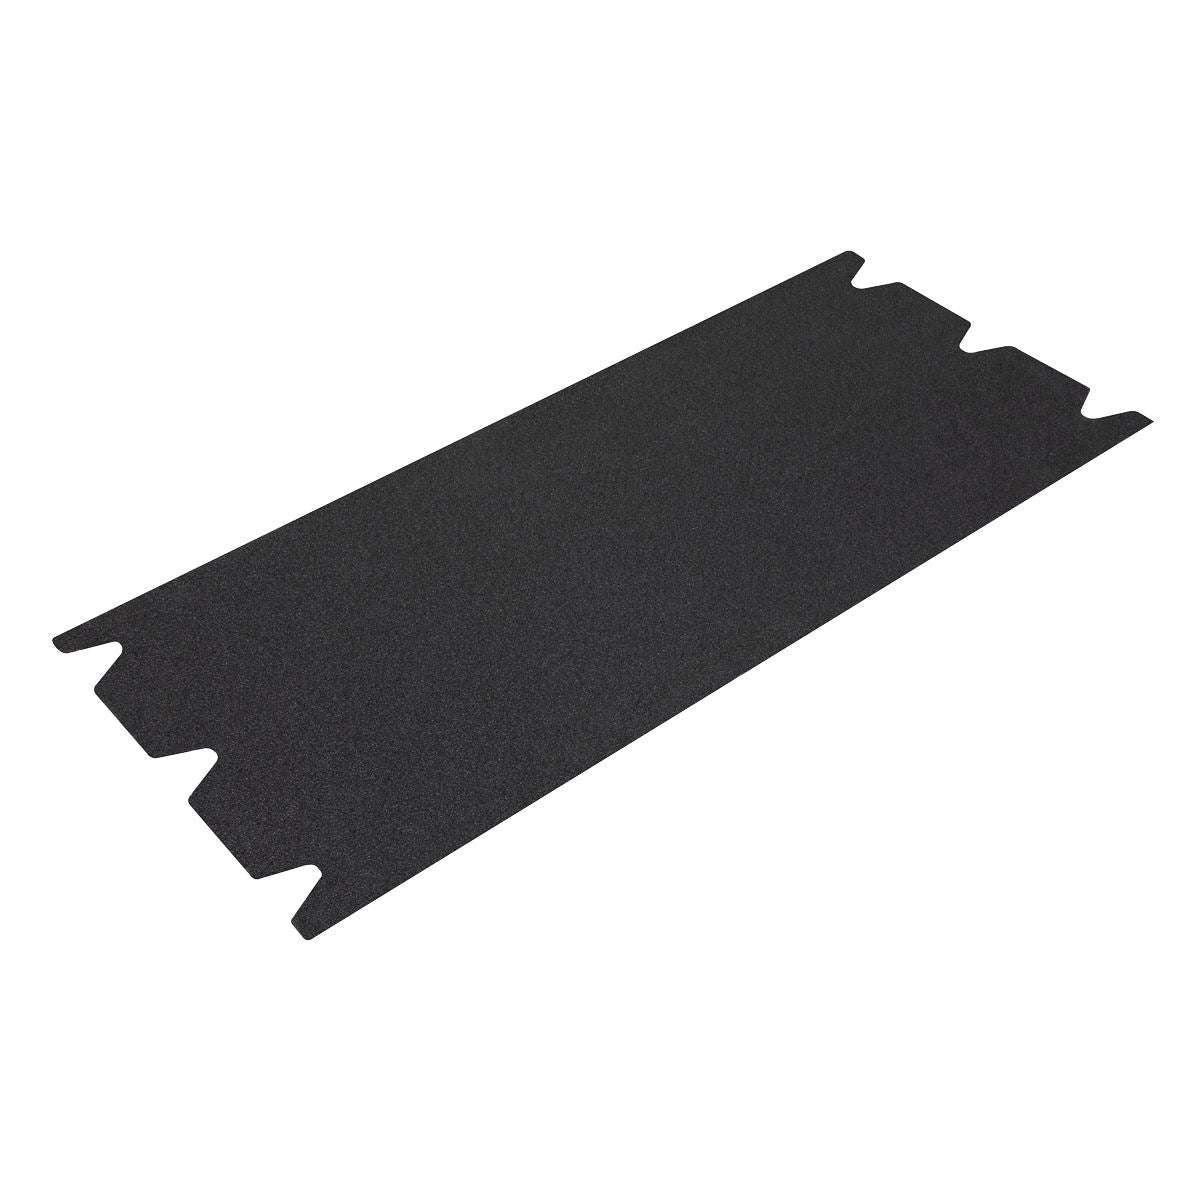 Sealey Floor Sanding Sheet 203 x 495mm 80Grit - Pack of 25